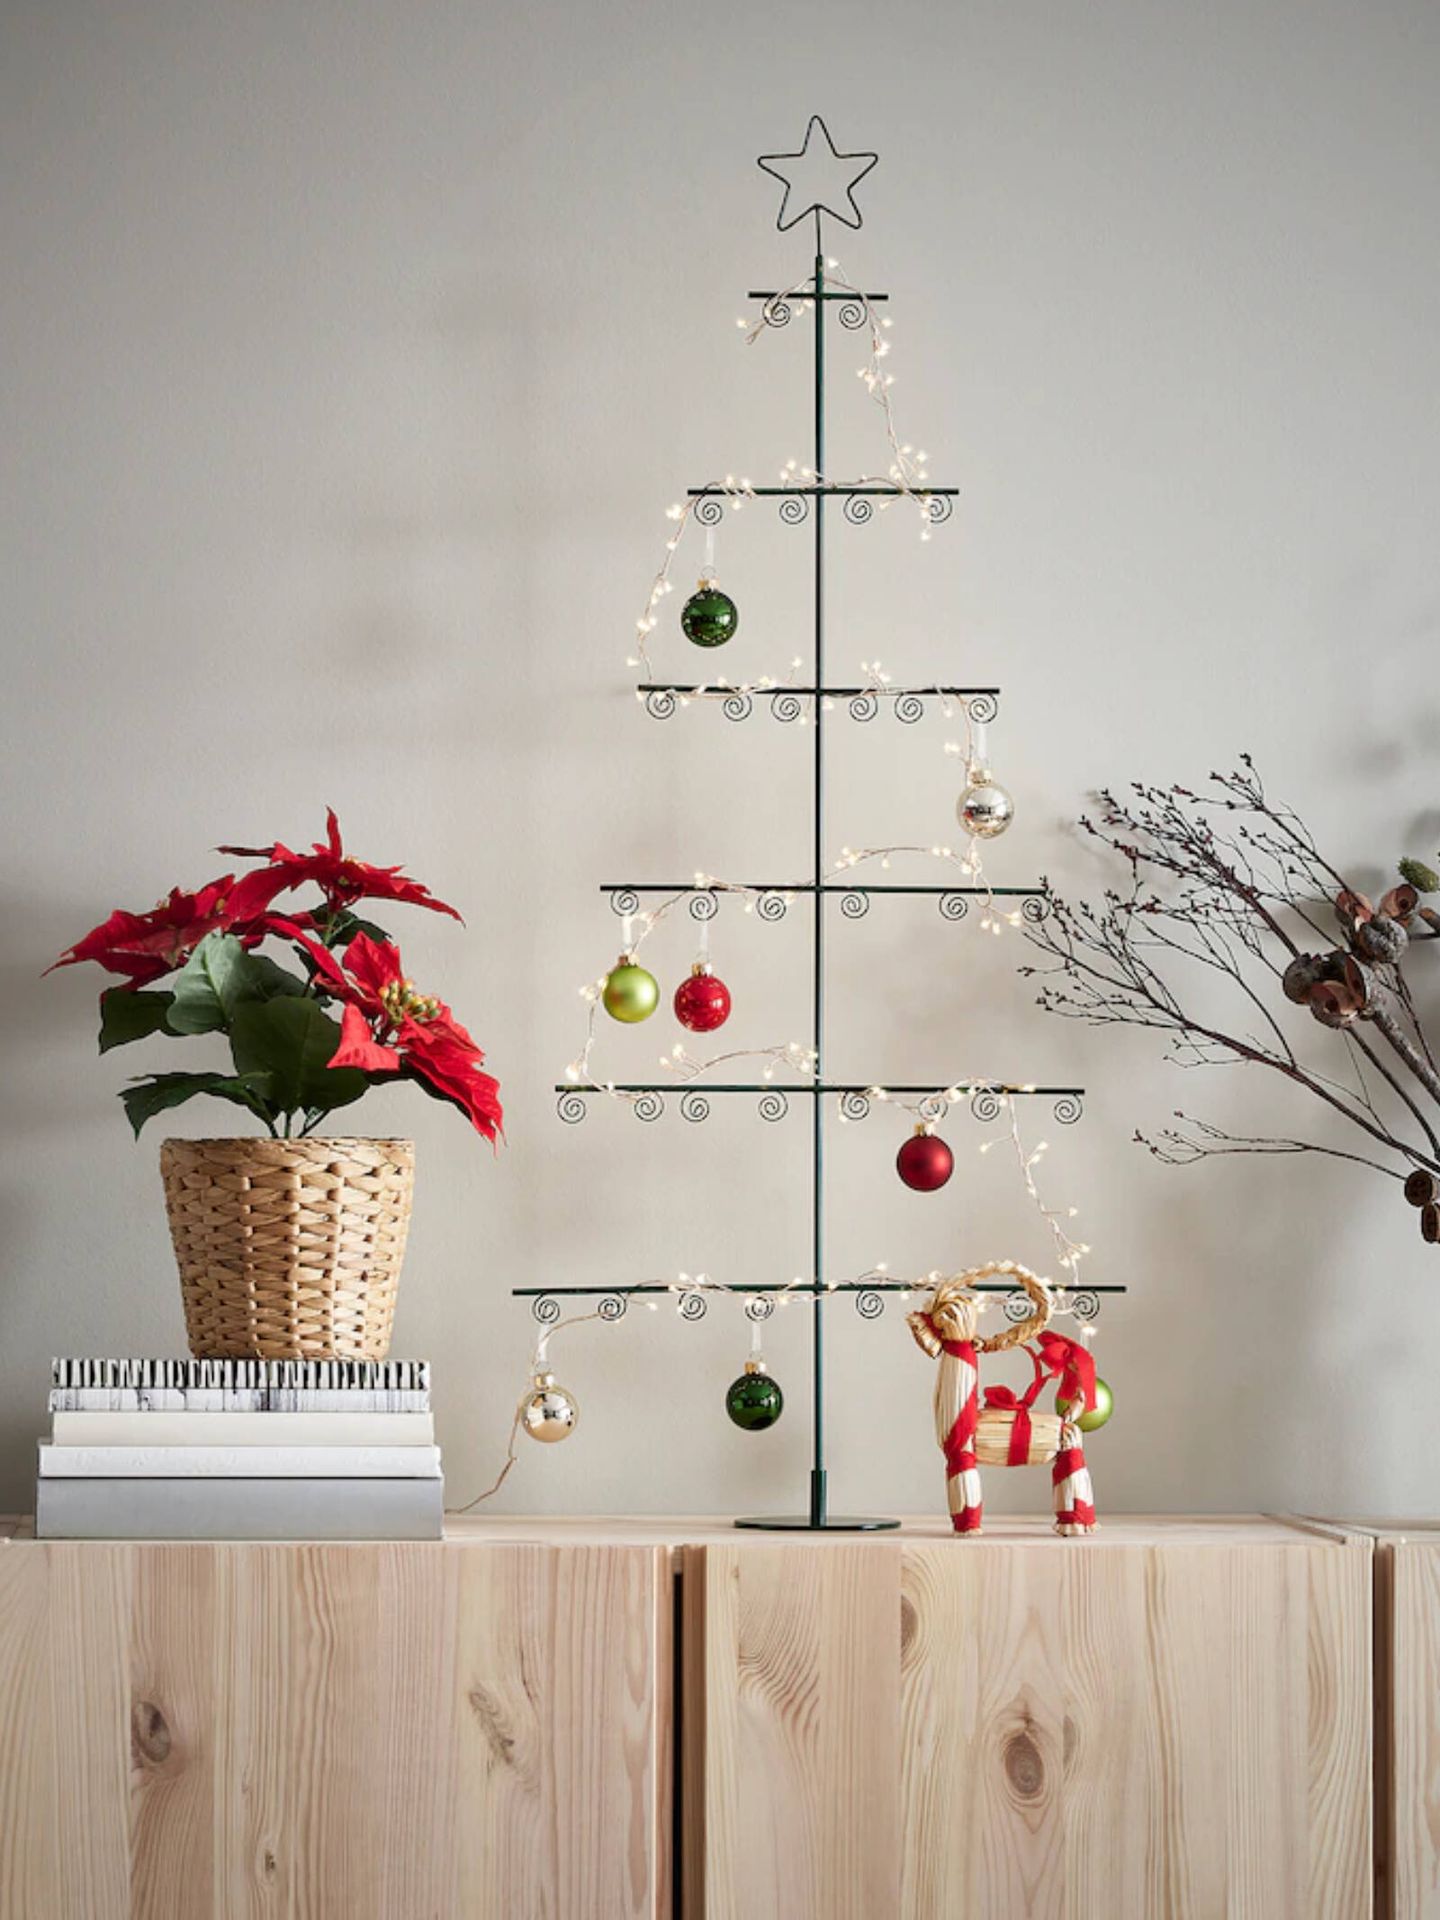 Novedades en decoración navideña de Ikea. (Cortesía)